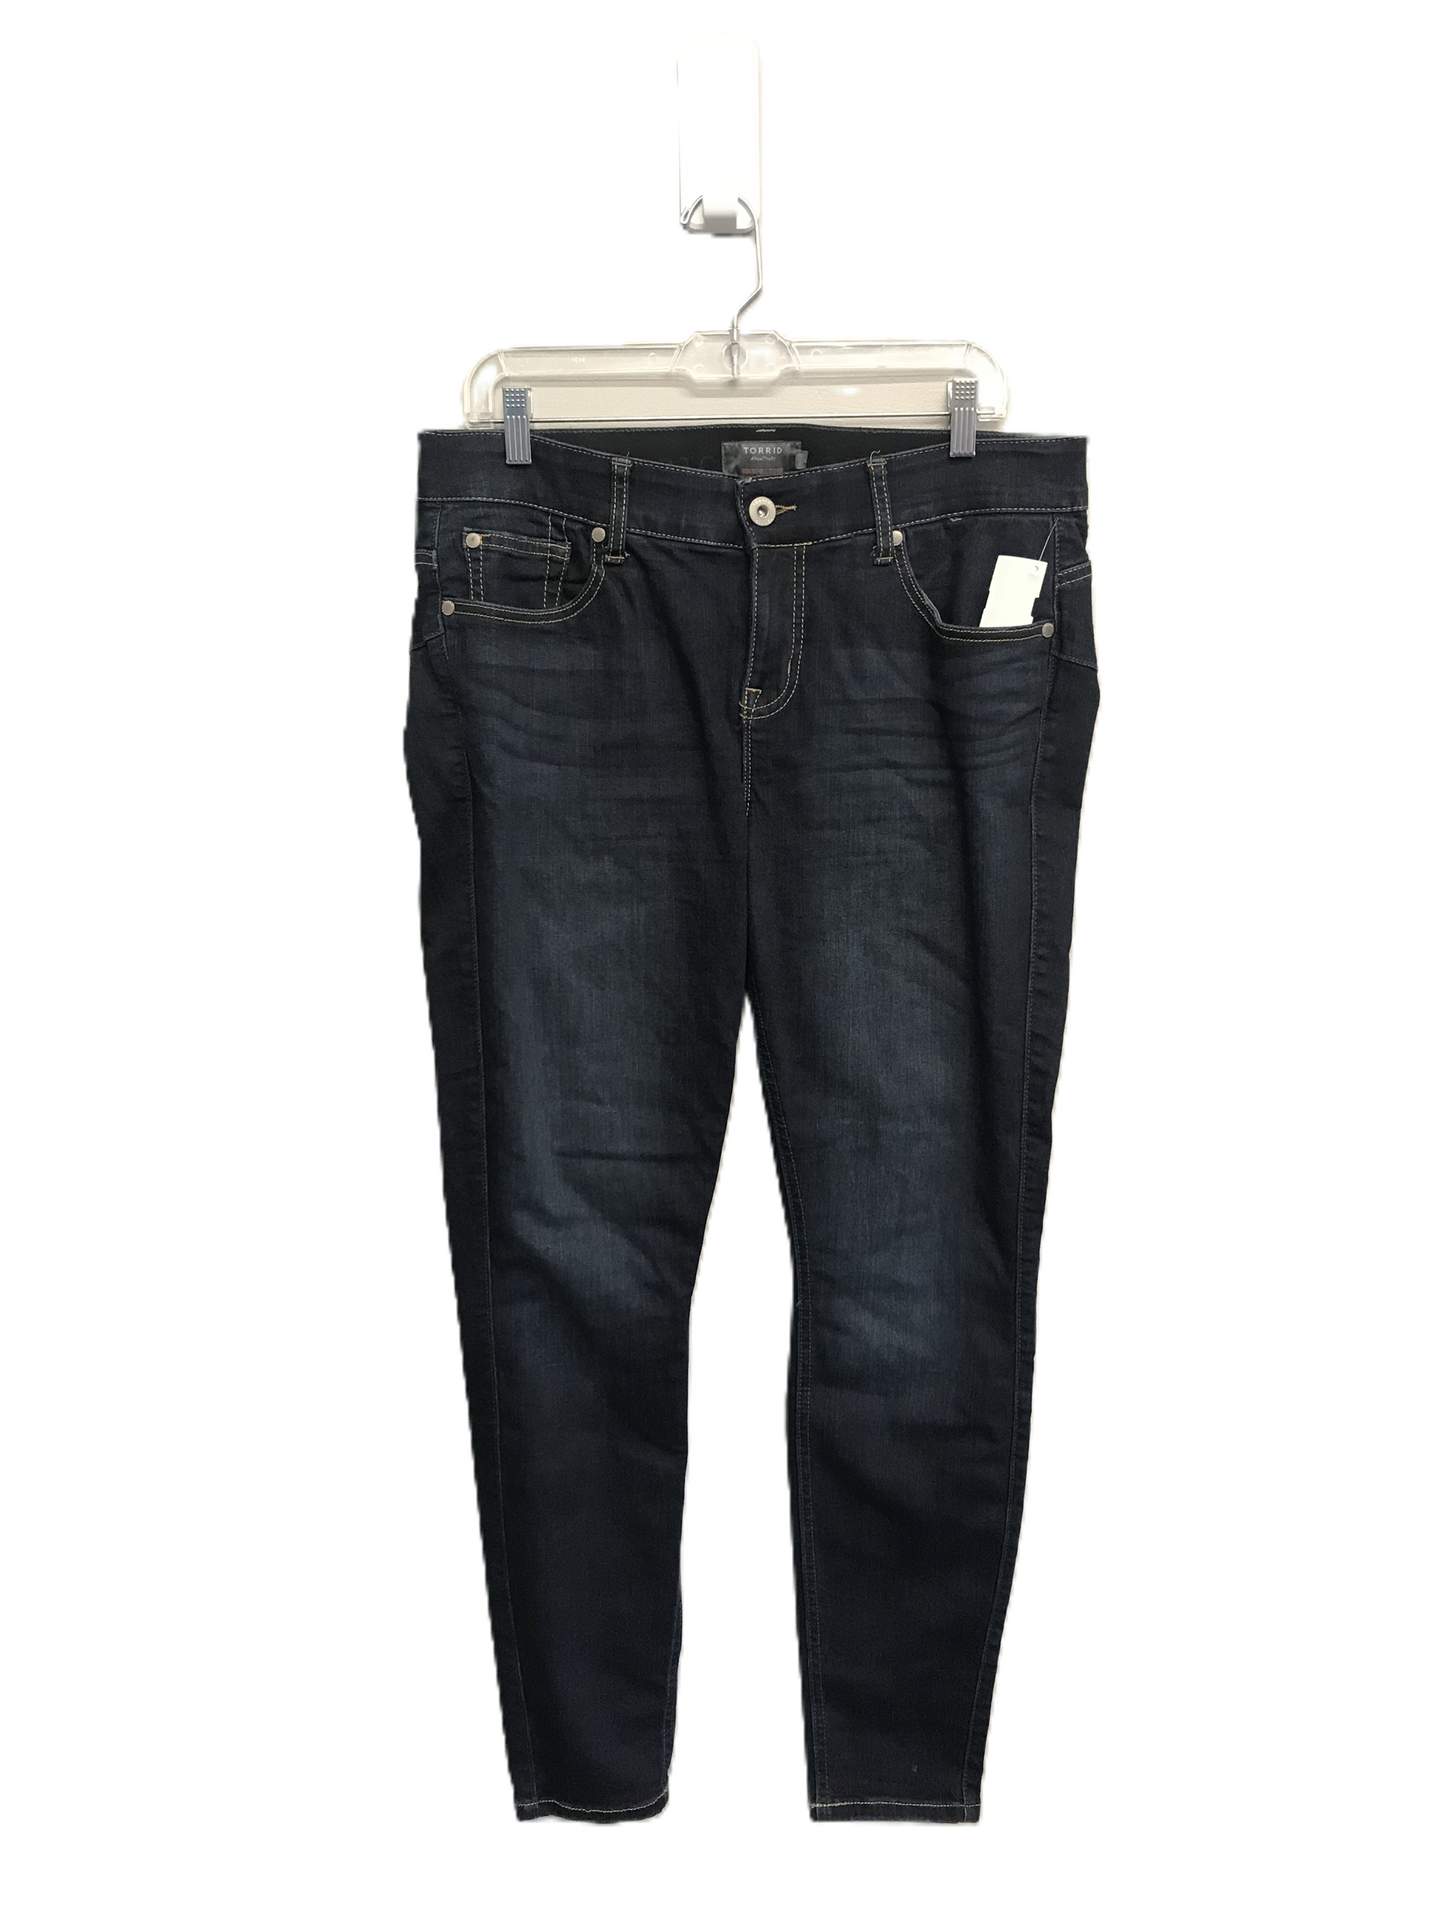 Blue Denim Jeans Skinny By Torrid, Size: 14